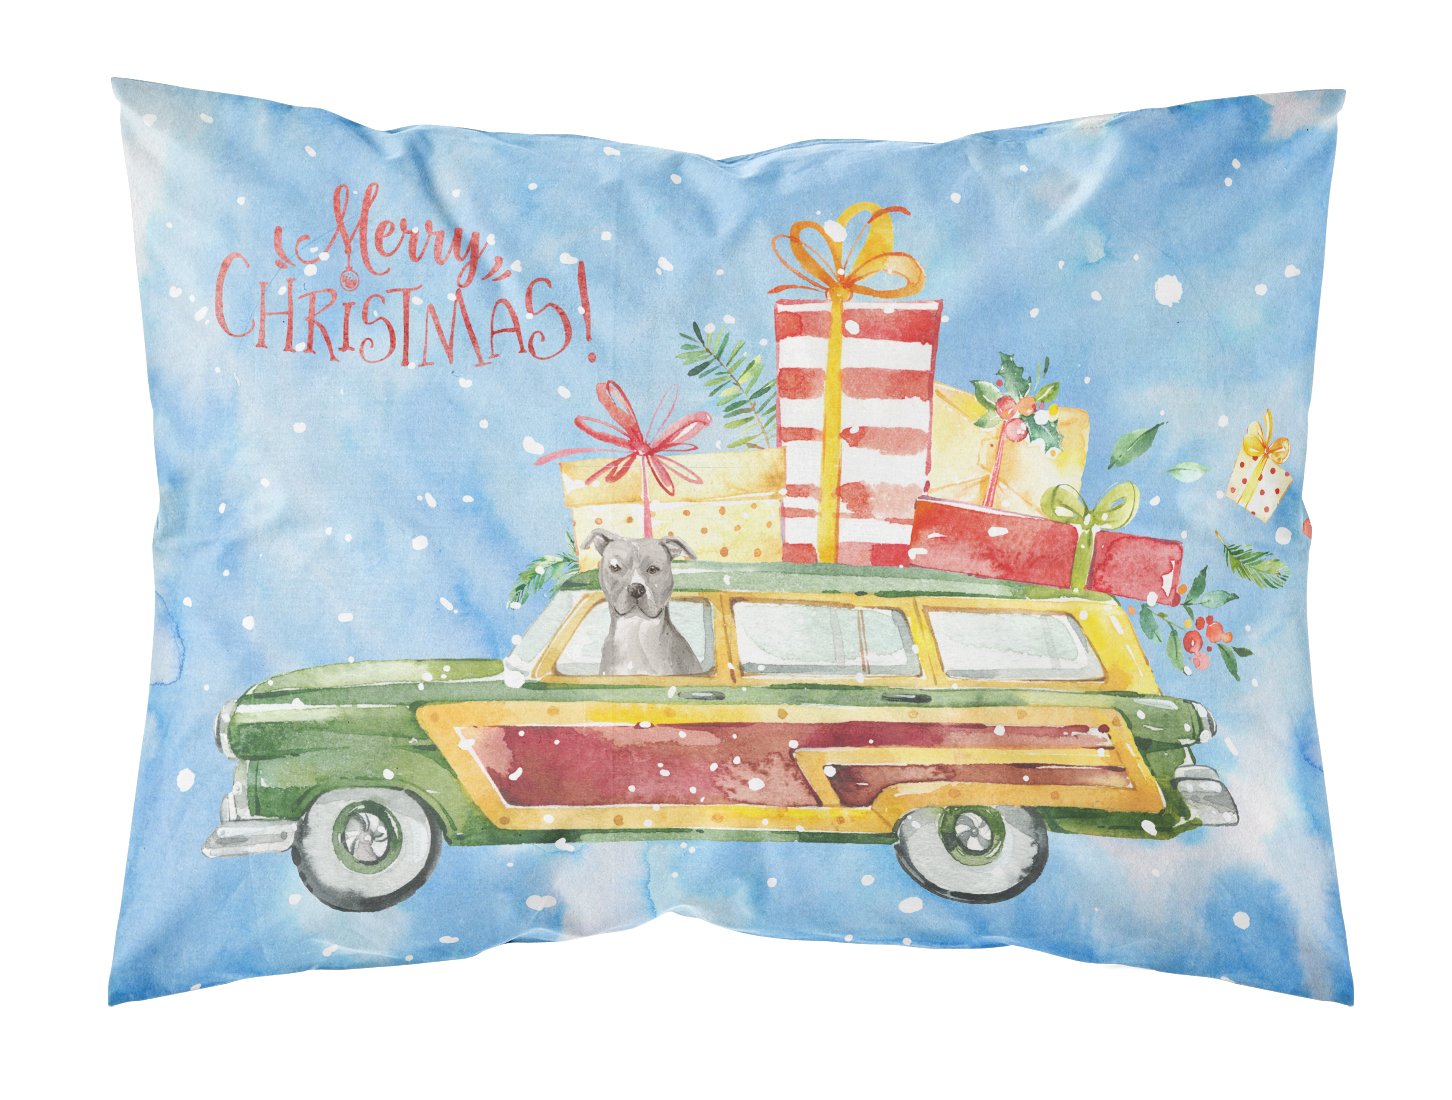 Merry Christmas Staffordshire Bull Terrier Fabric Standard Pillowcase CK2432PILLOWCASE by Caroline's Treasures